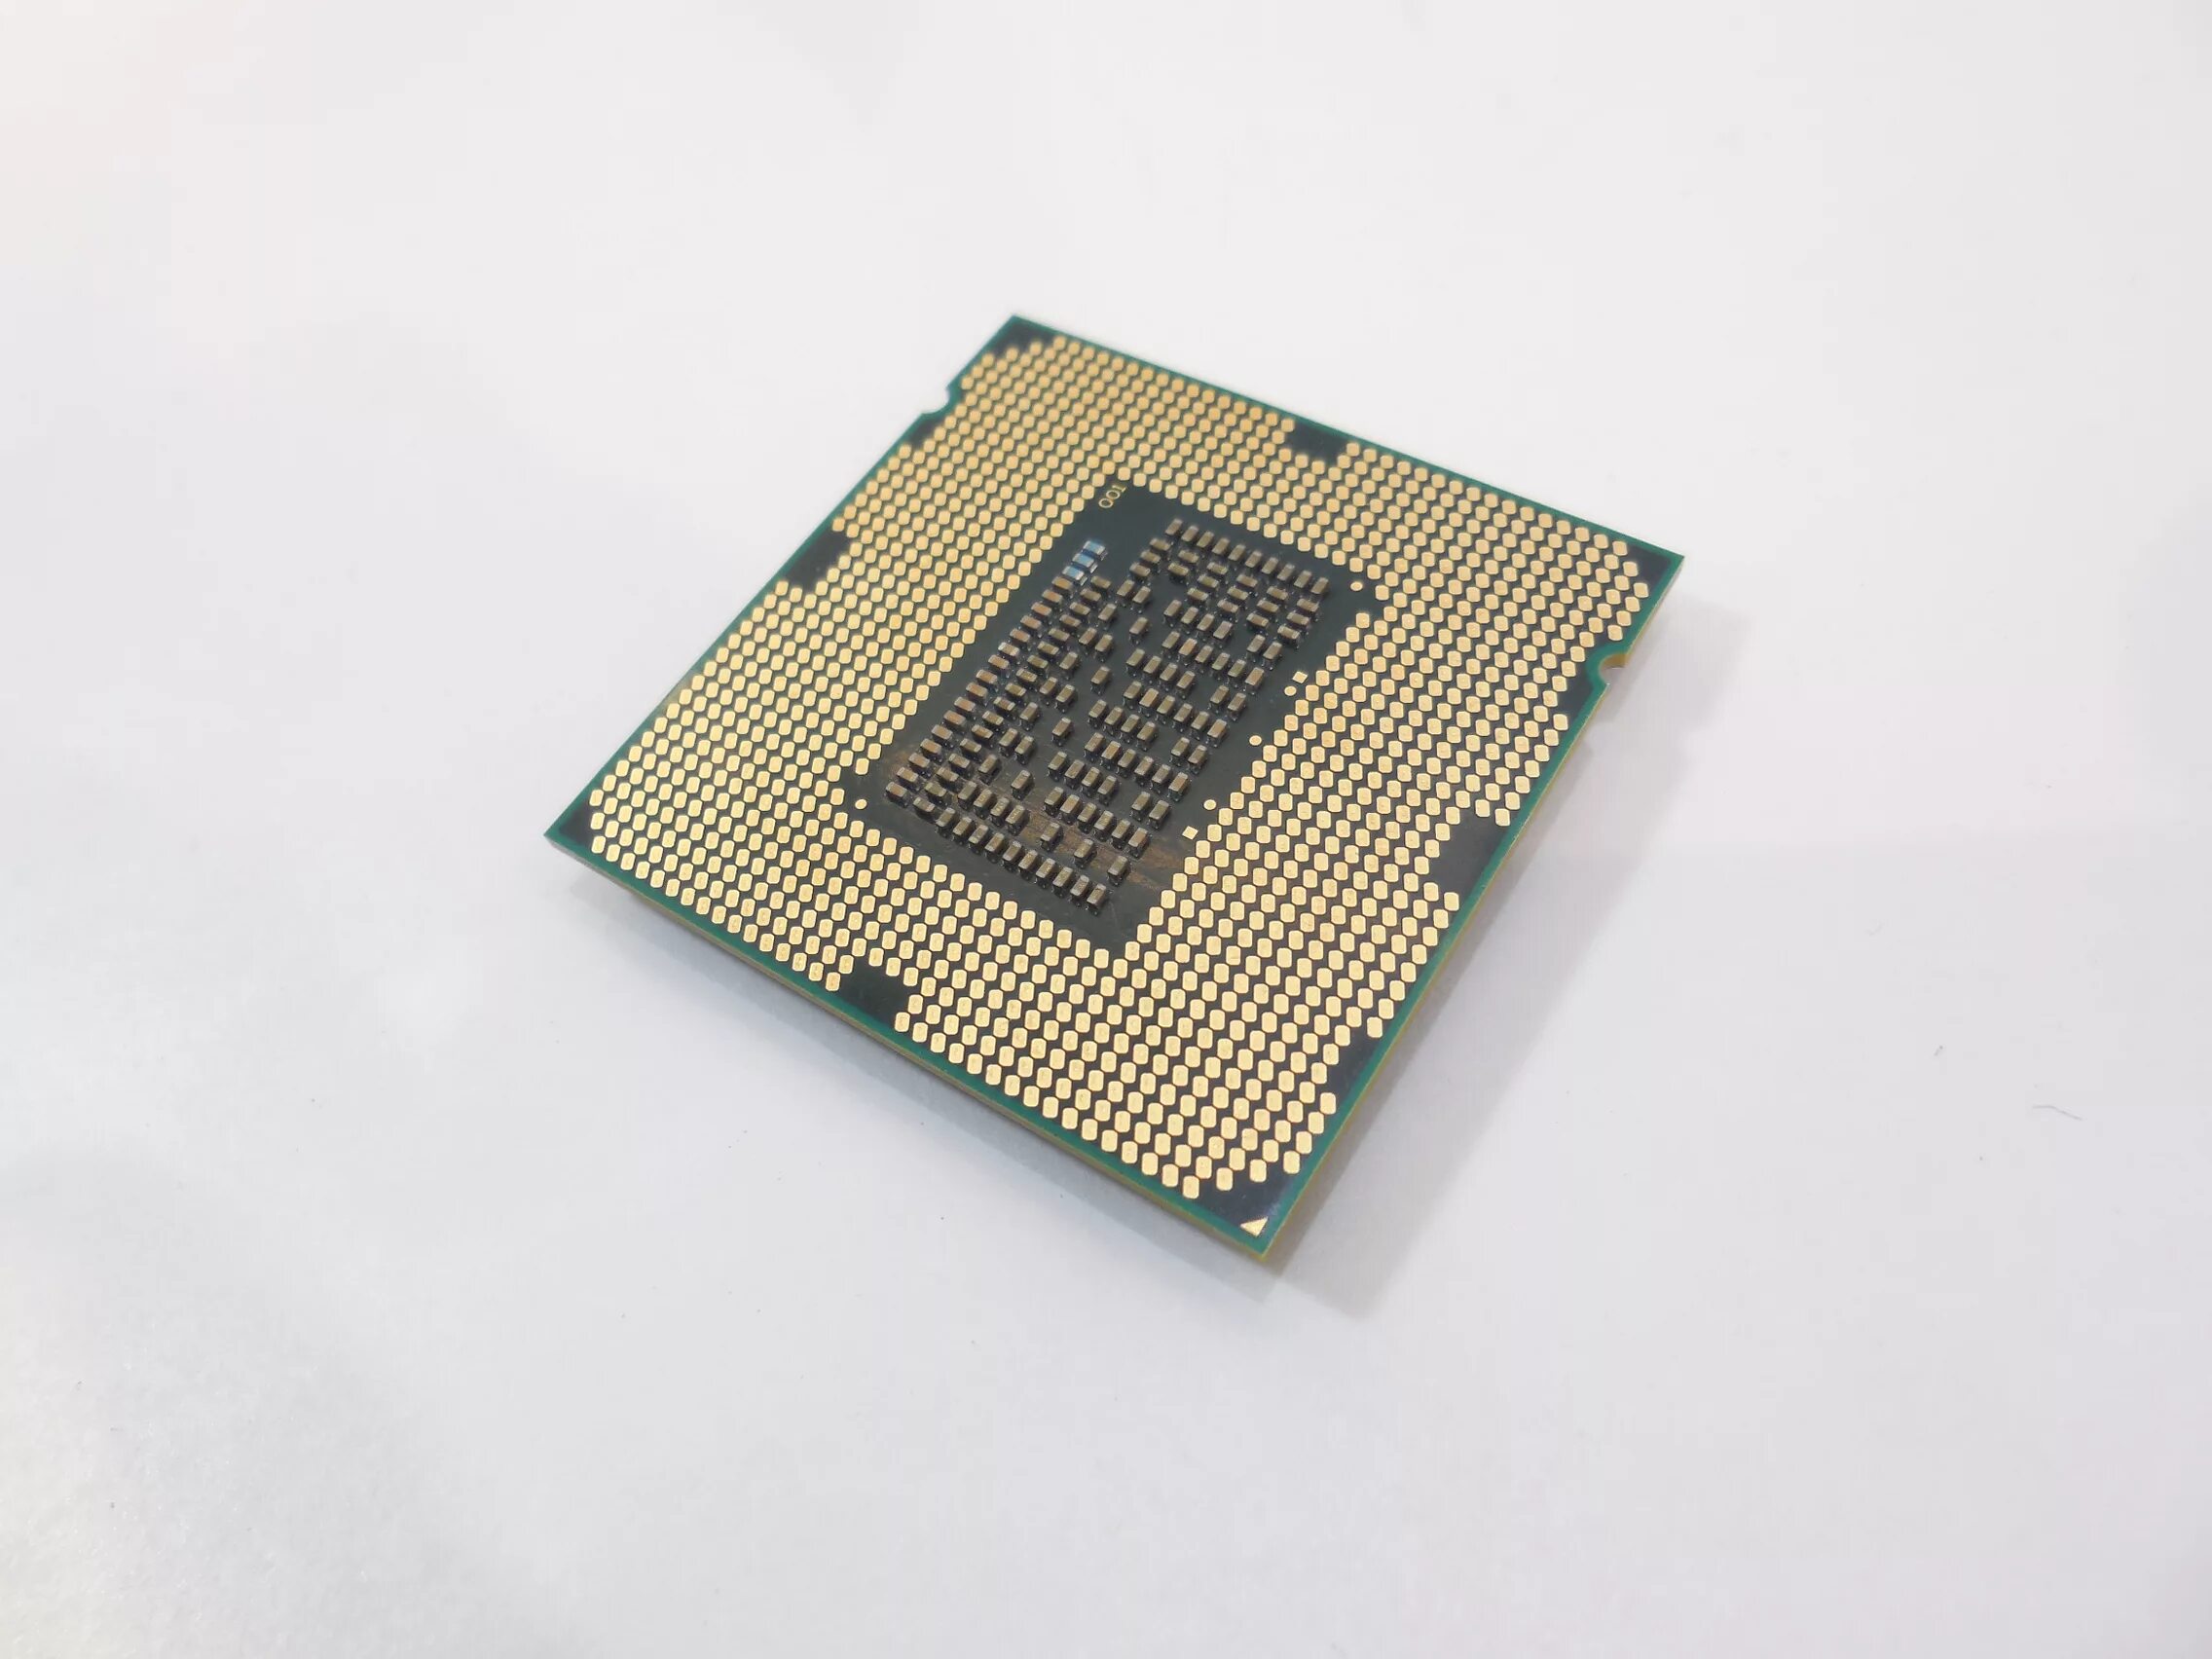 Socket 1155 процессоры. Intel Core i5. Intel Core i5-2400 Sandy Bridge lga1155, 4 x 3100 МГЦ. Intel Core i5-2500 3.3 GHZ. Intel Core i5 2400 сокет.